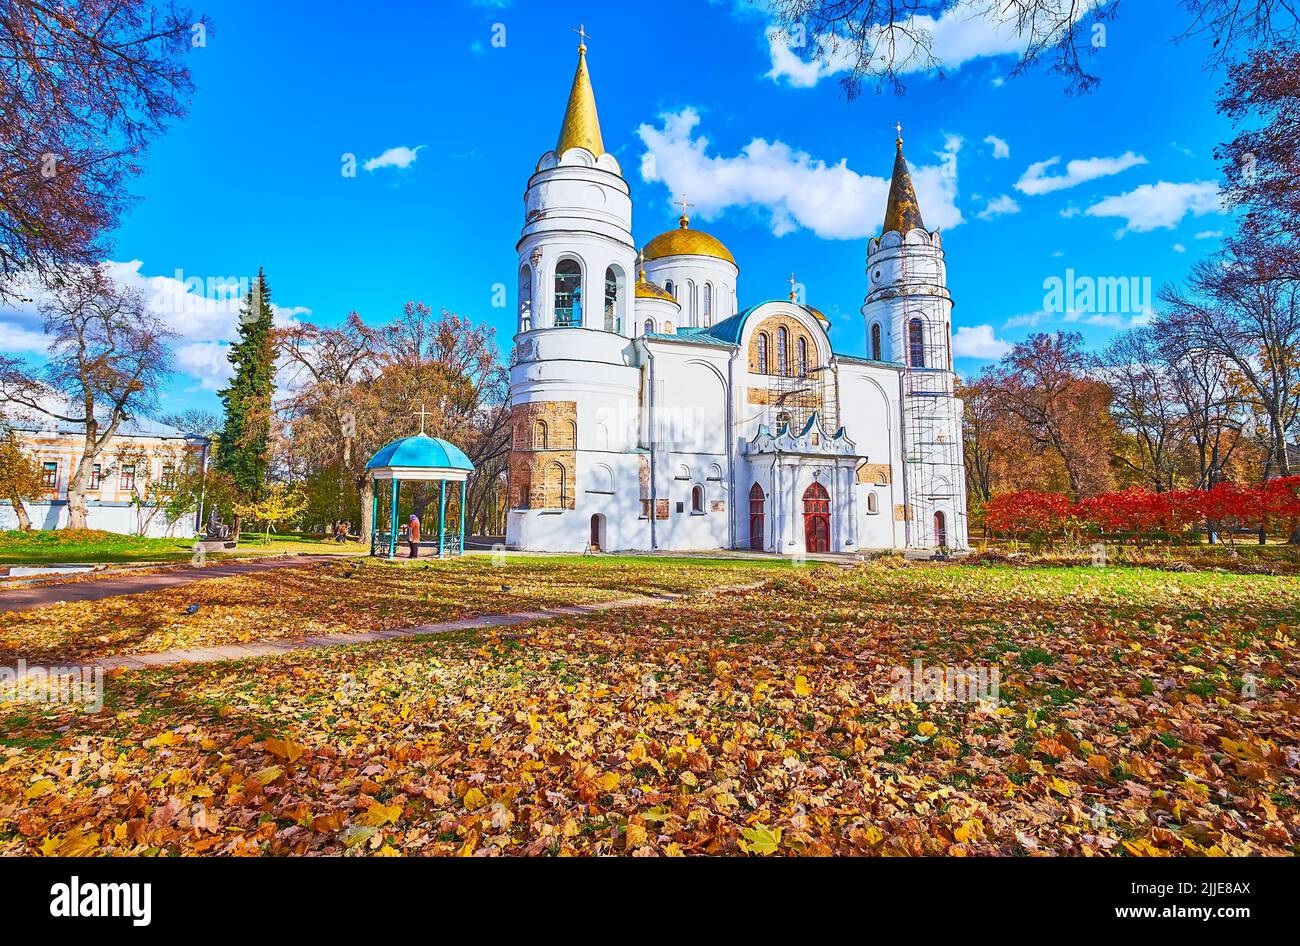 The facade of medieval Orthodox Transfiguration Cathedral, located in Chernihiv Dytynets (Chernigov Citadel) Park, Chernihiv, Ukraine Stock Photo